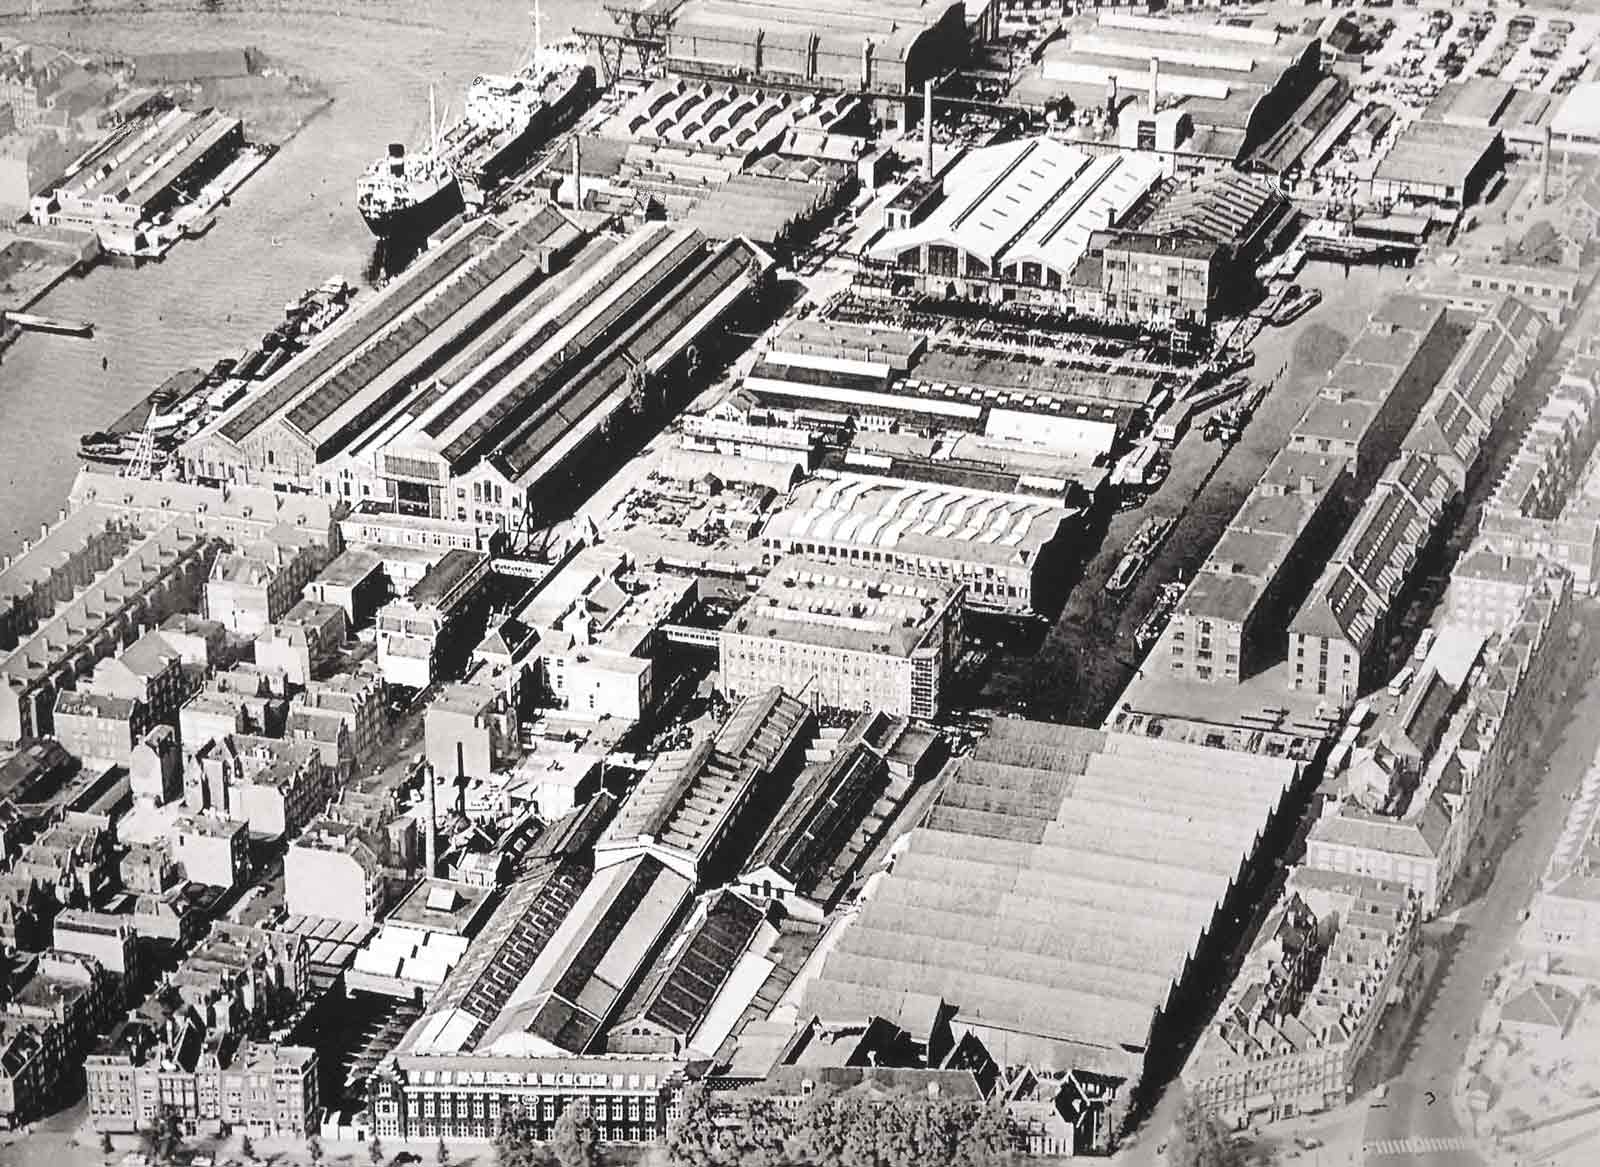 historic photo showing Werkspoor buildings at Oostenburg